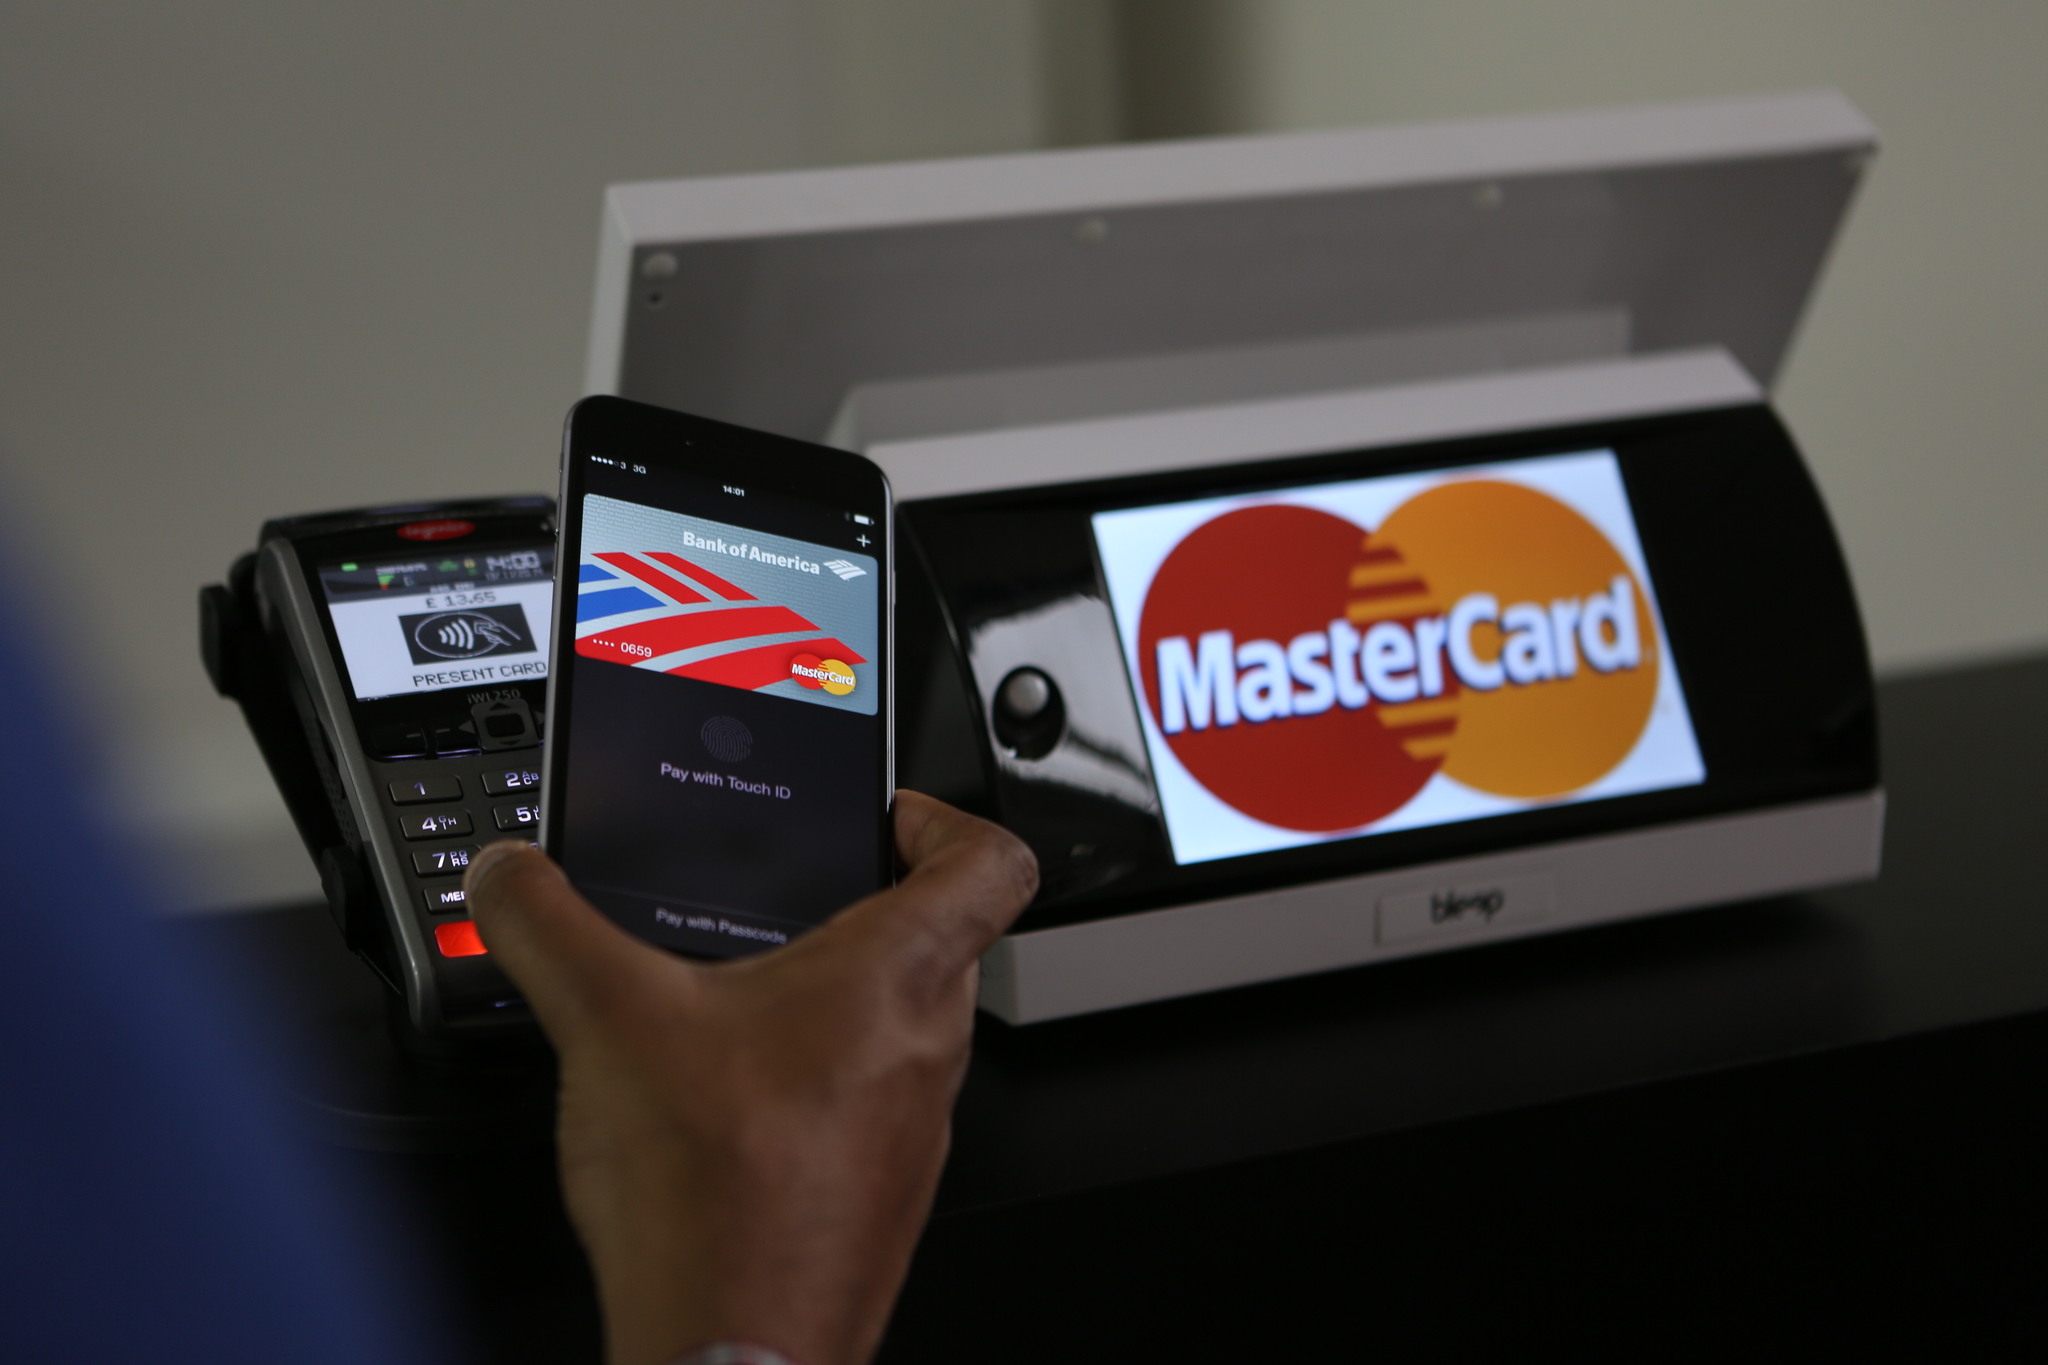 Apple Pay Mastercard